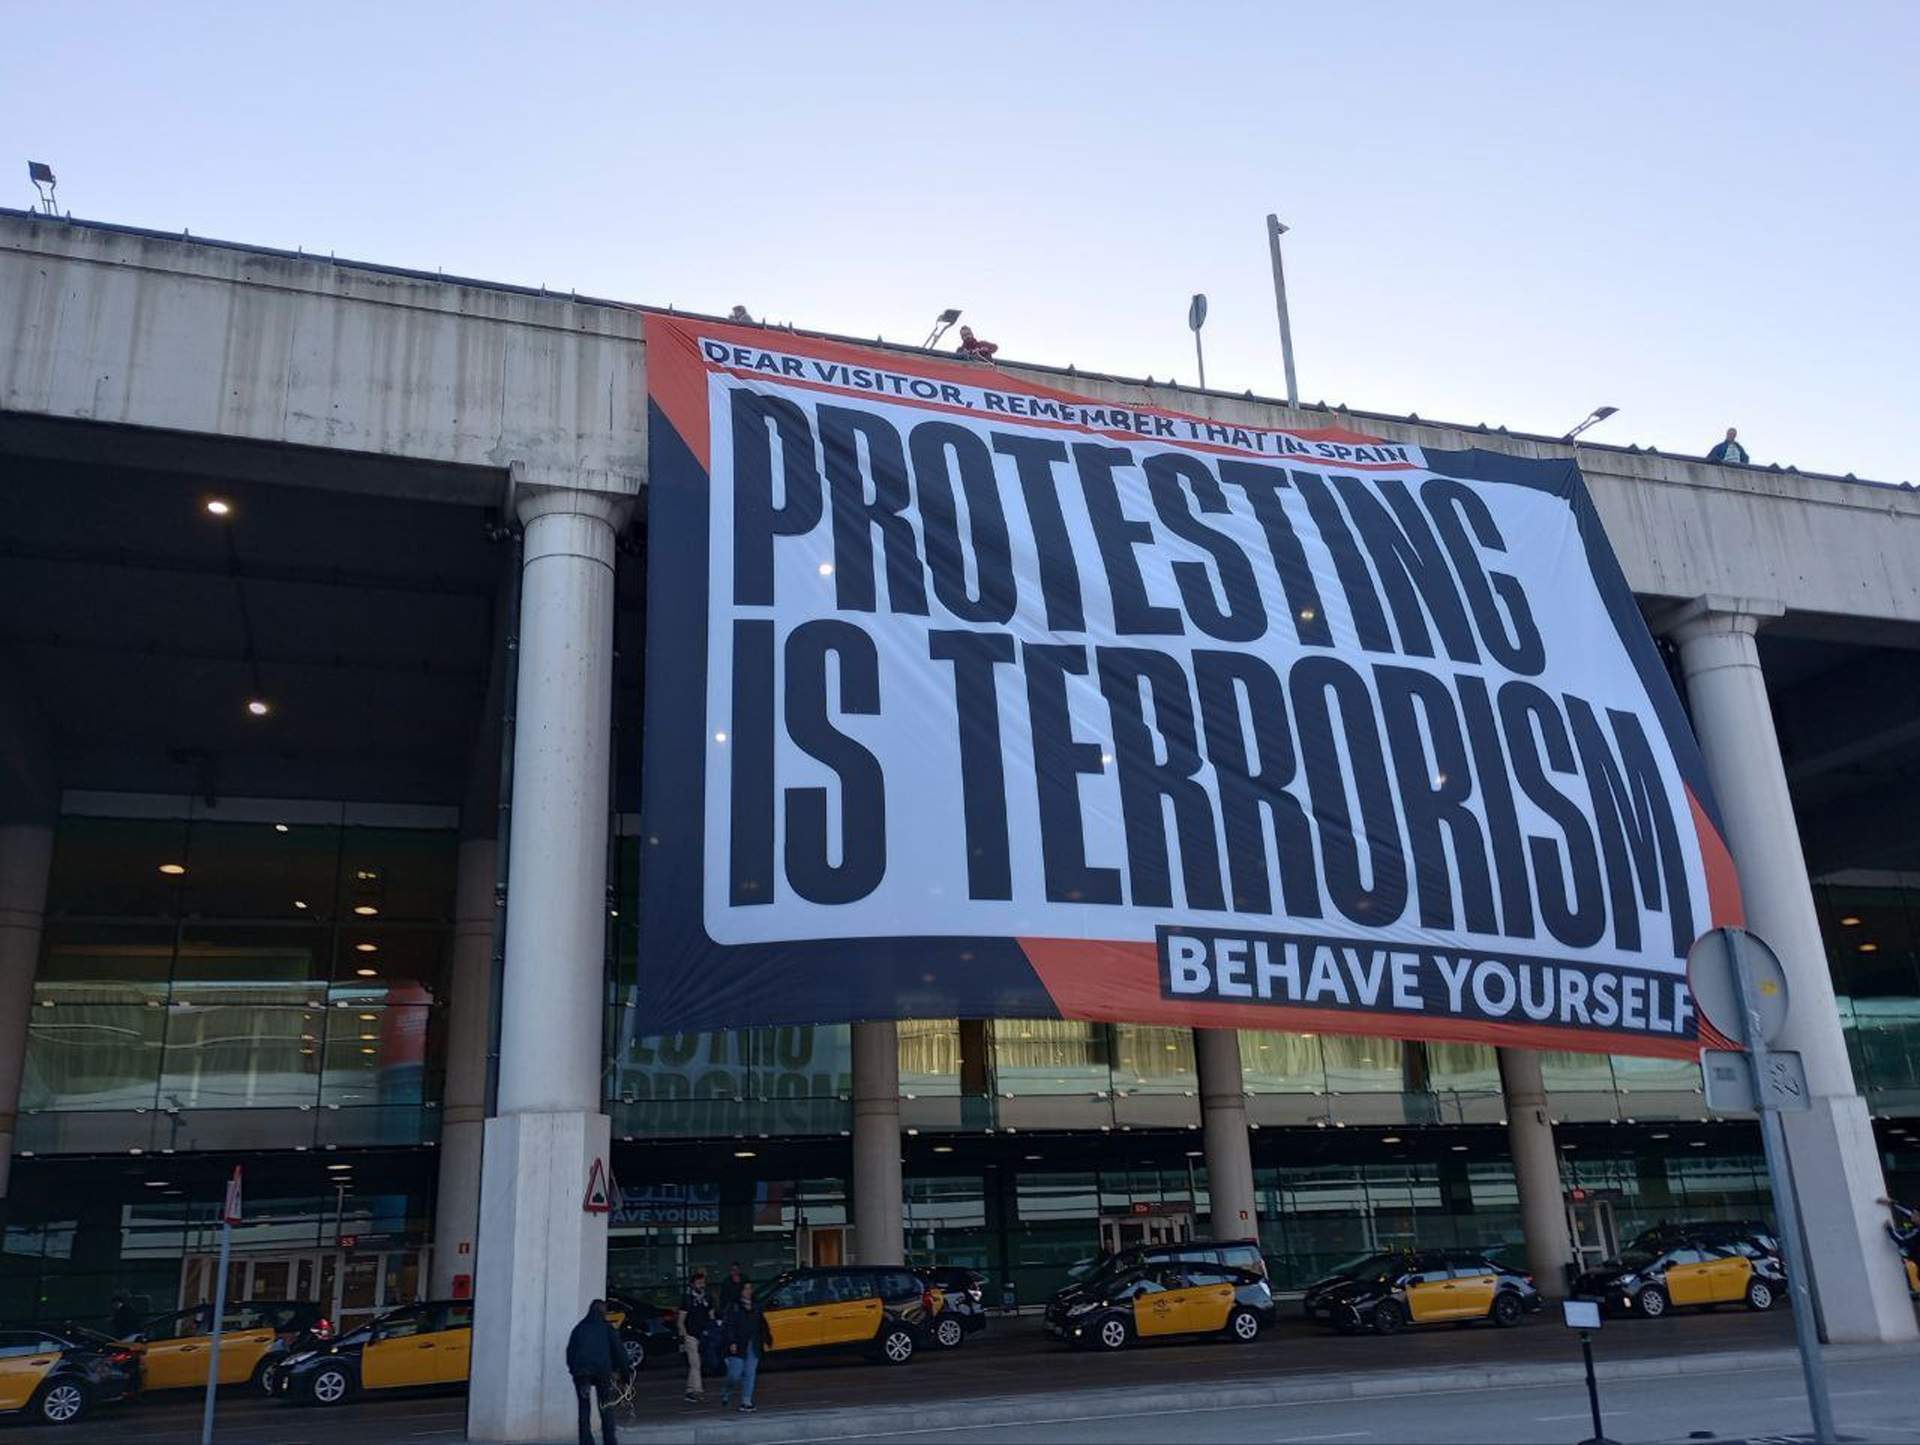 Òmnium unfurls Barcelona airport banner, warning visitors: "In Spain, protesting is terrorism"